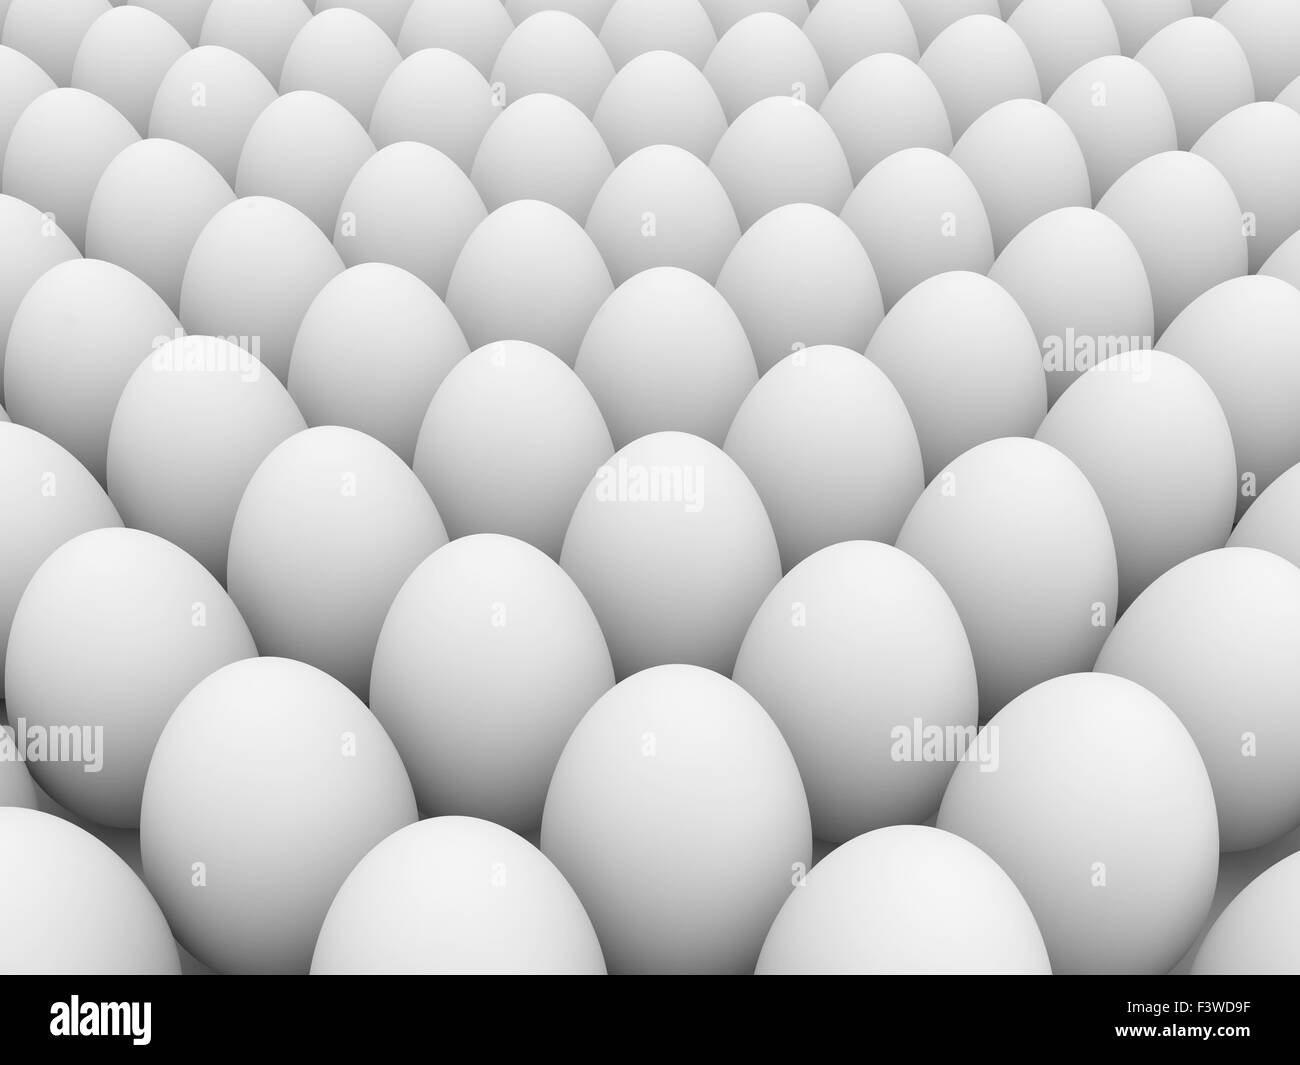 Egg over white background Stock Photo